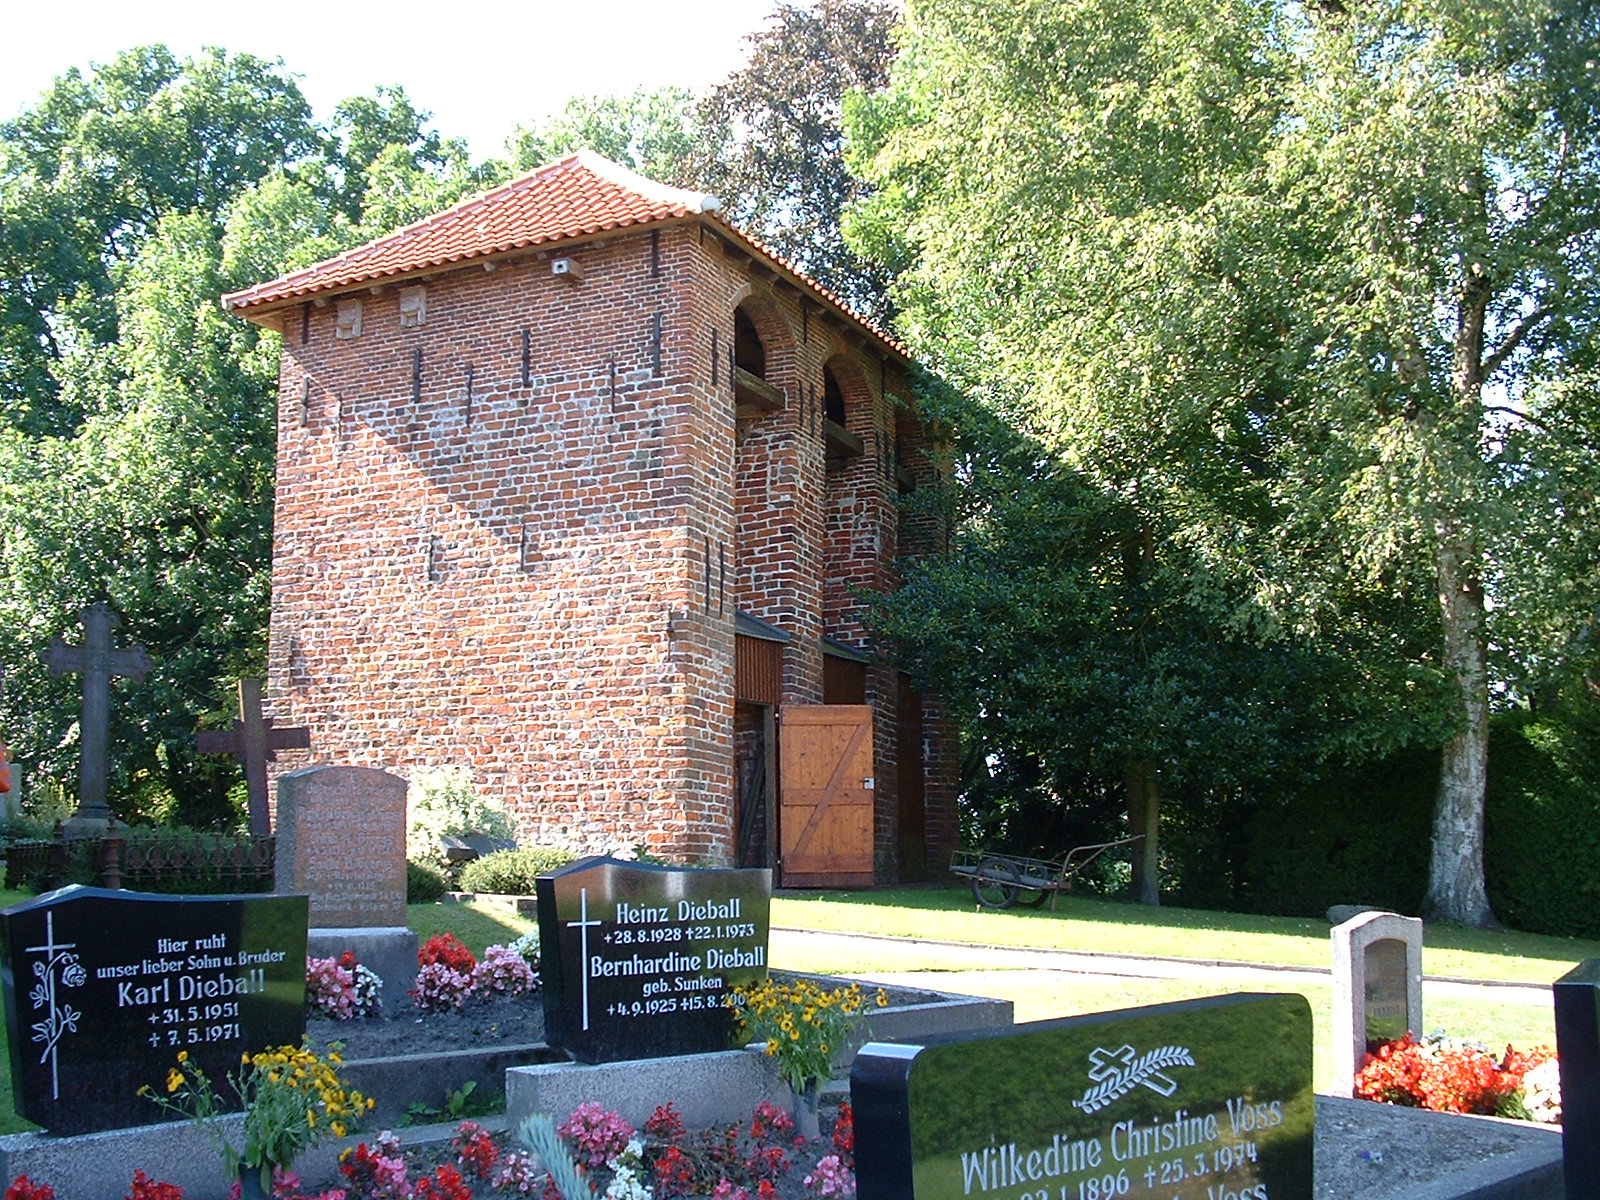 Die Wibadikirche in Wiegboldsbur - Ostfriesland - Glockenturm